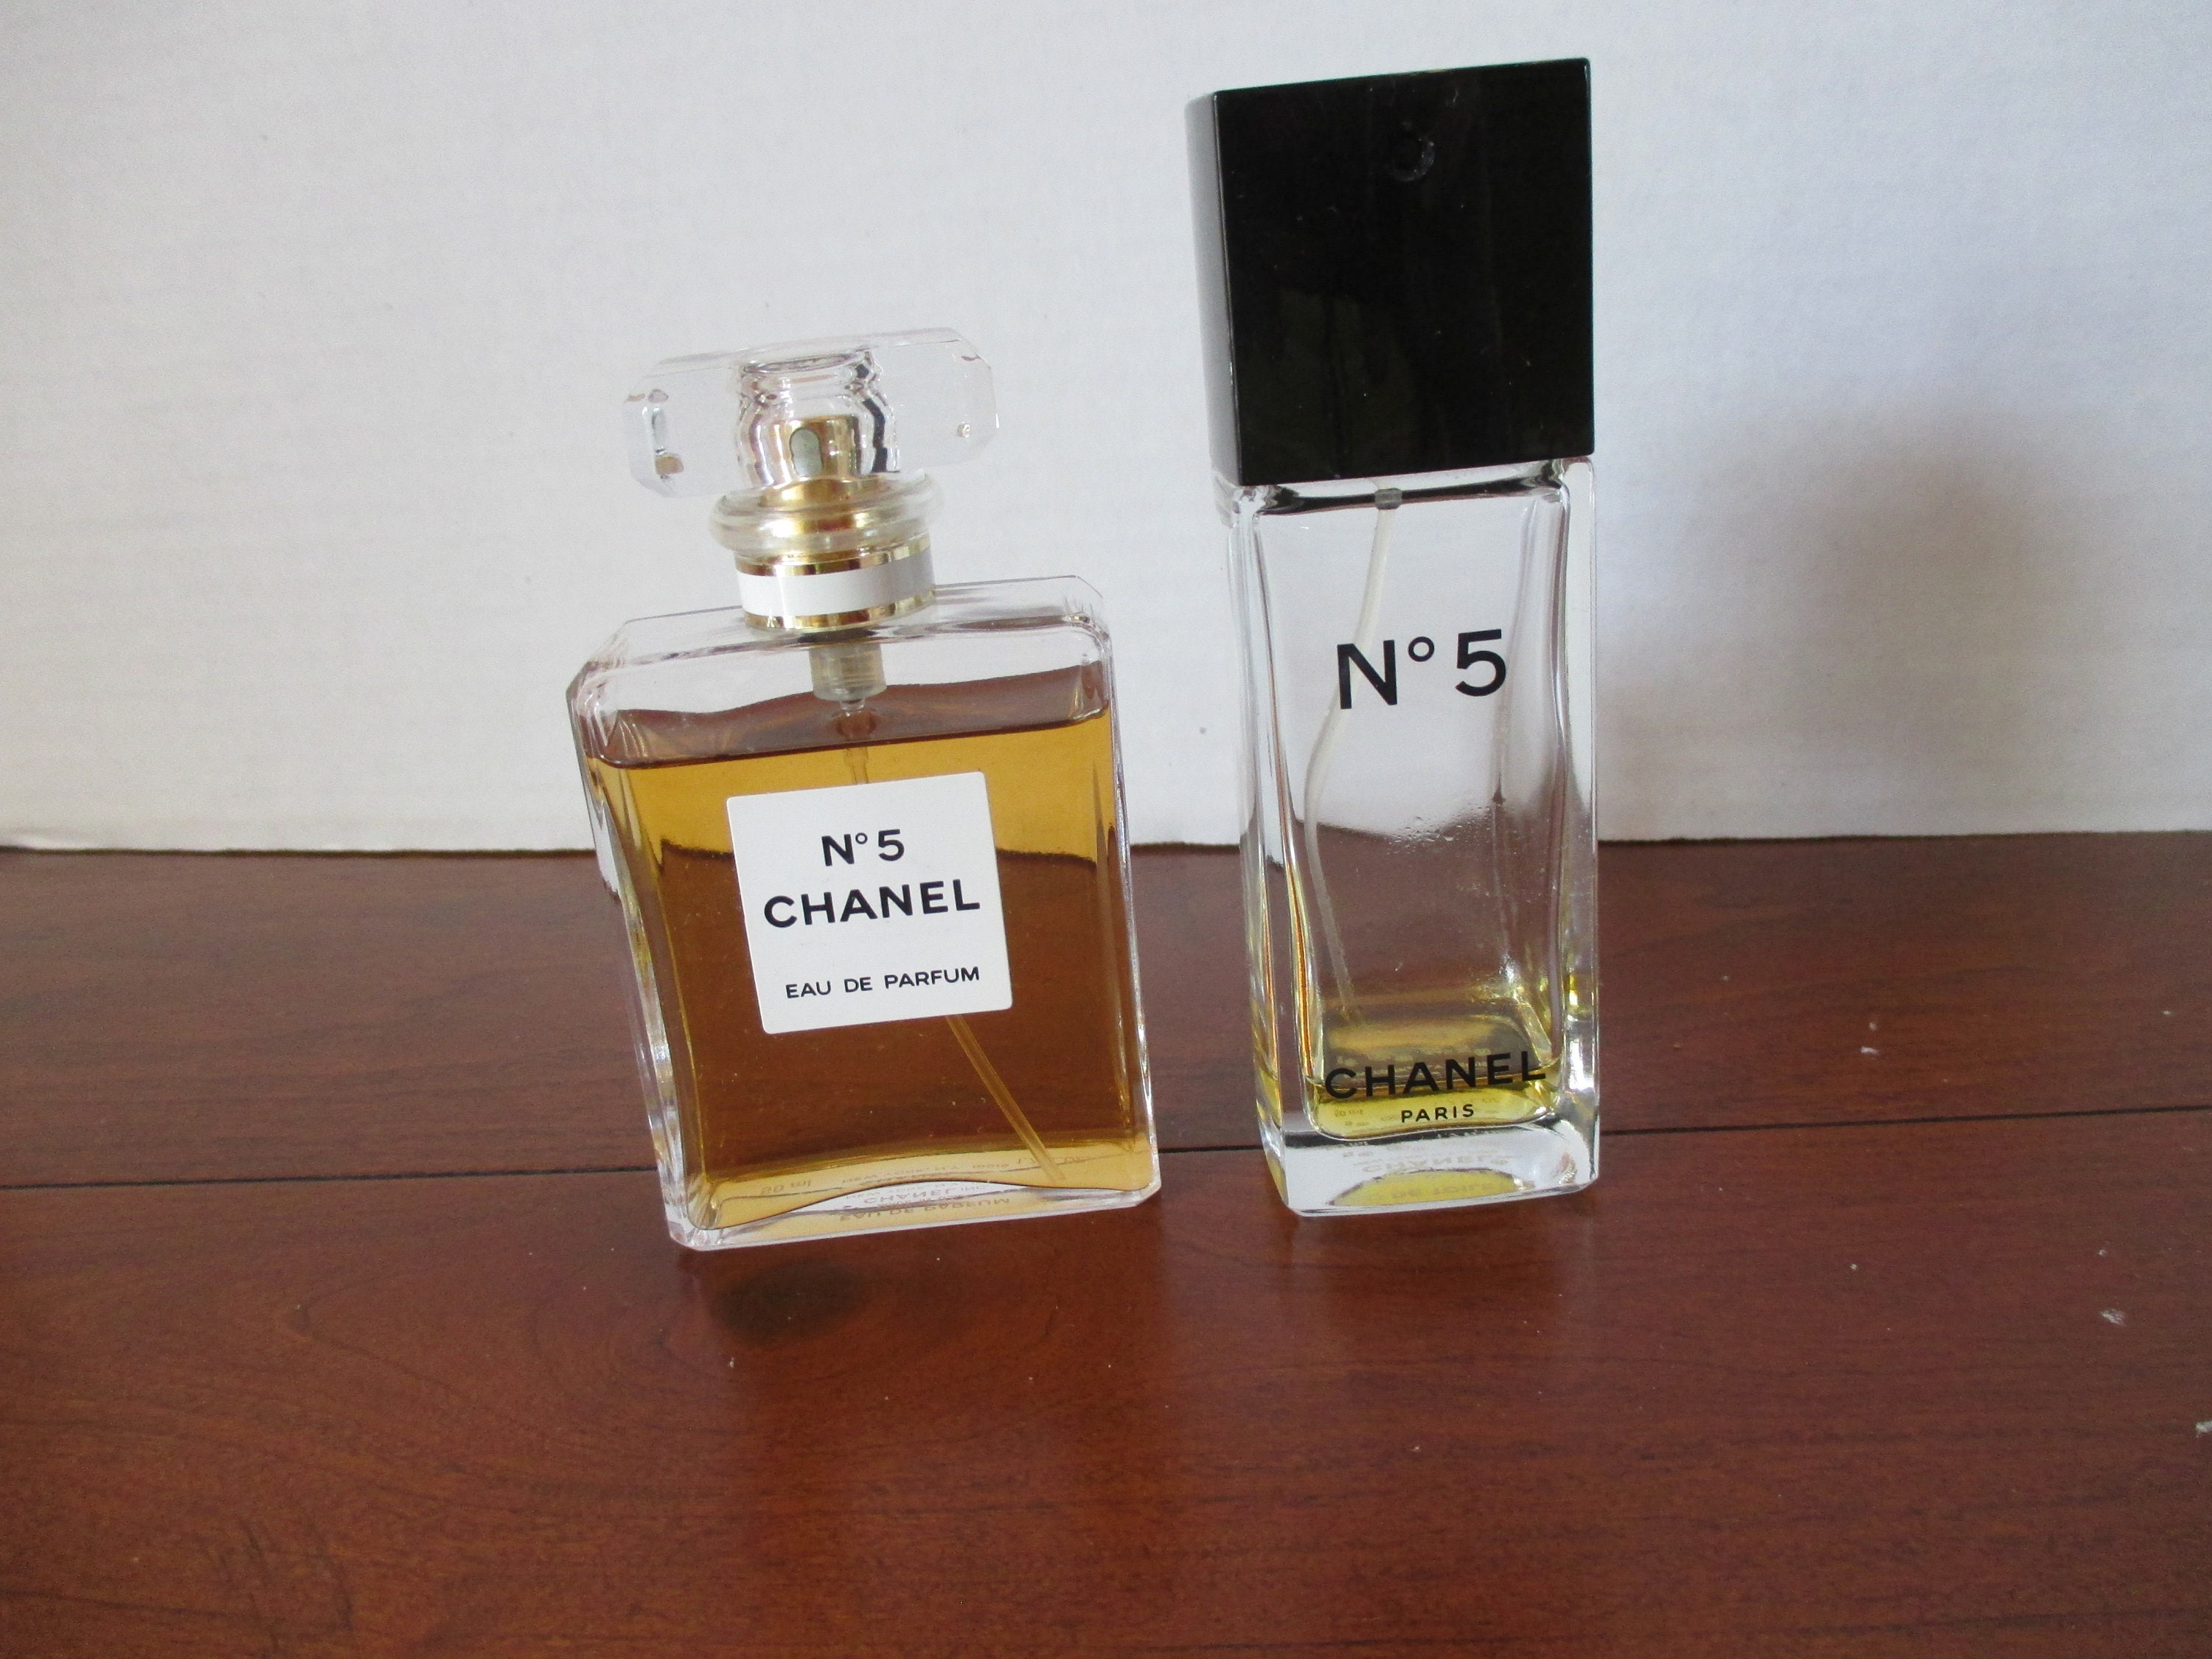 Chanel No 5 1.2 oz / 35 ml Eau de Parfum Spray